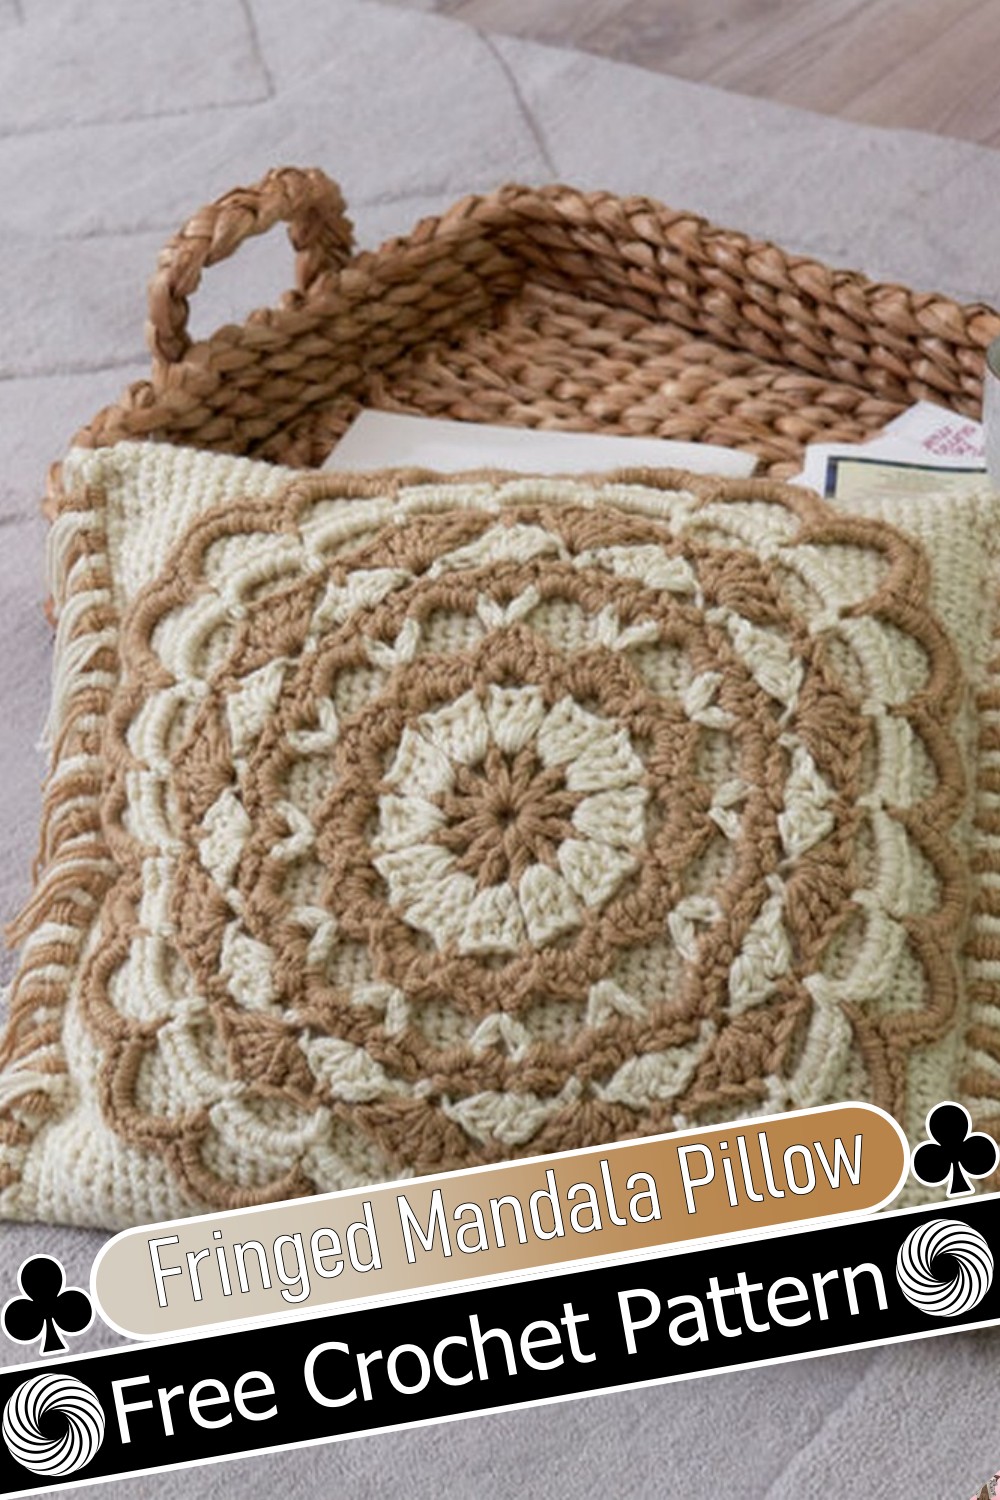 Fringed Mandala Pillow